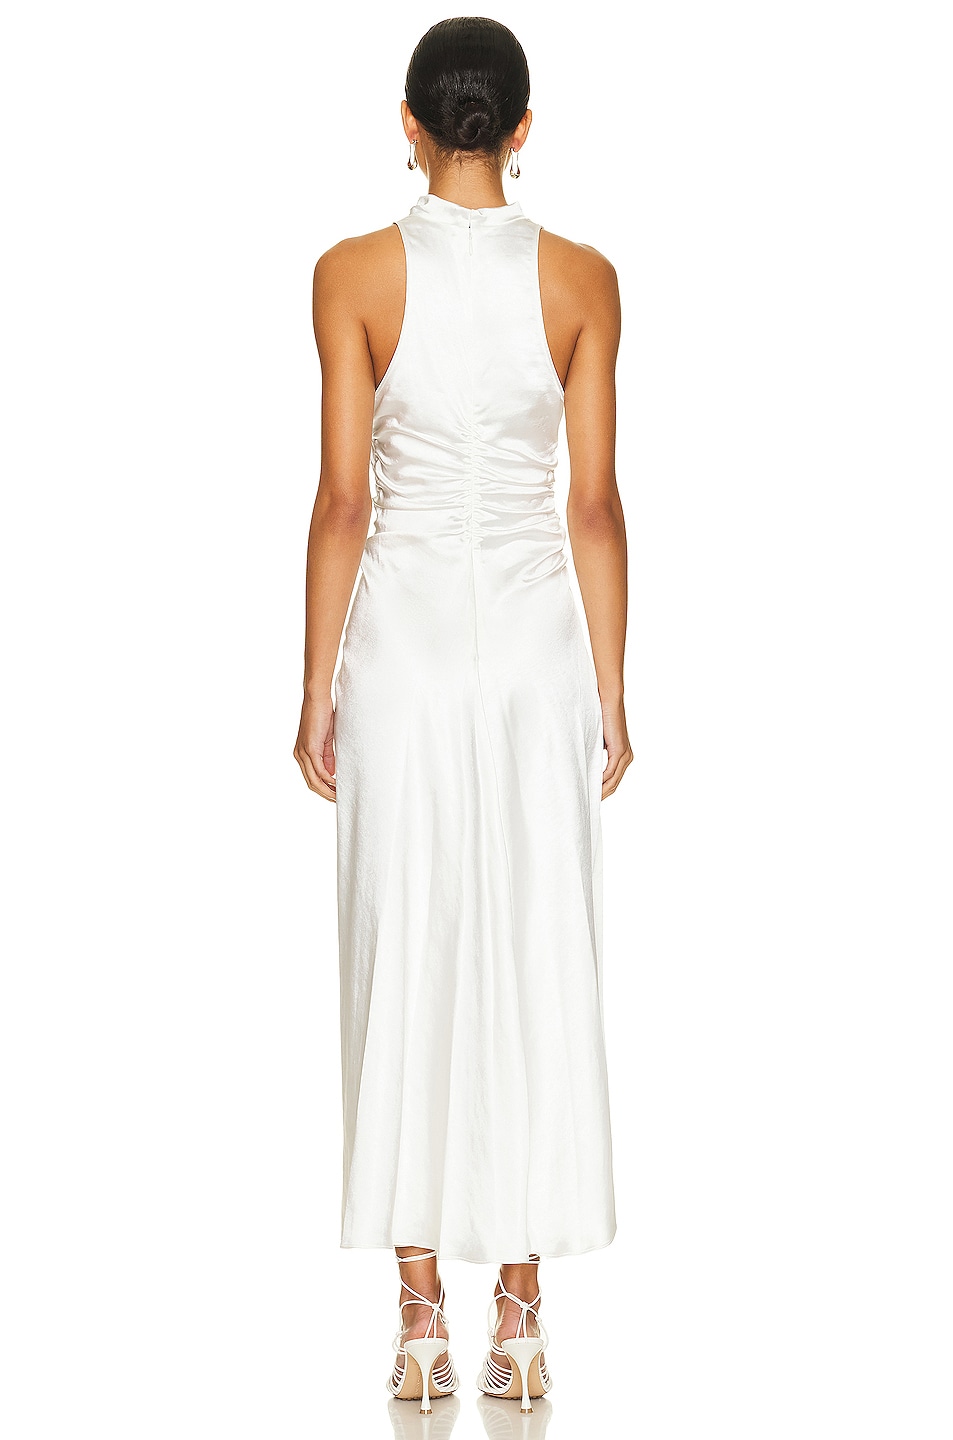 A.L.C. Inez Dress in Whisper White | FWRD